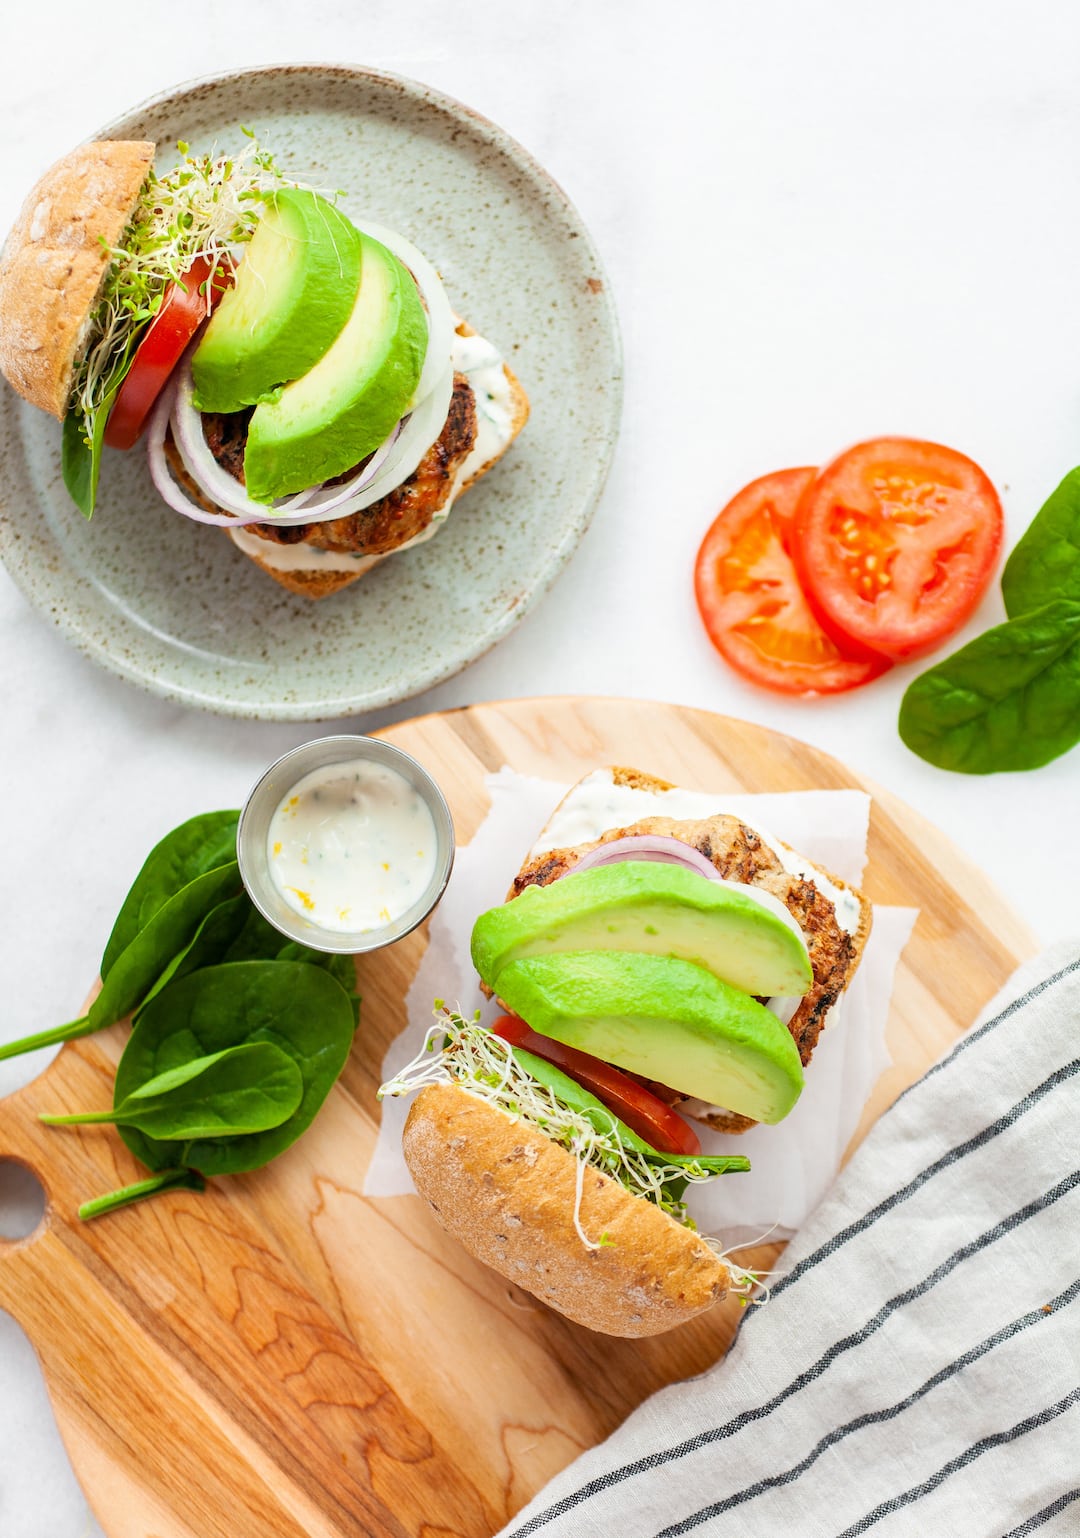 Easy Best Healthy Turkey Burger Recipe with Avocado - gluten free, dairy free